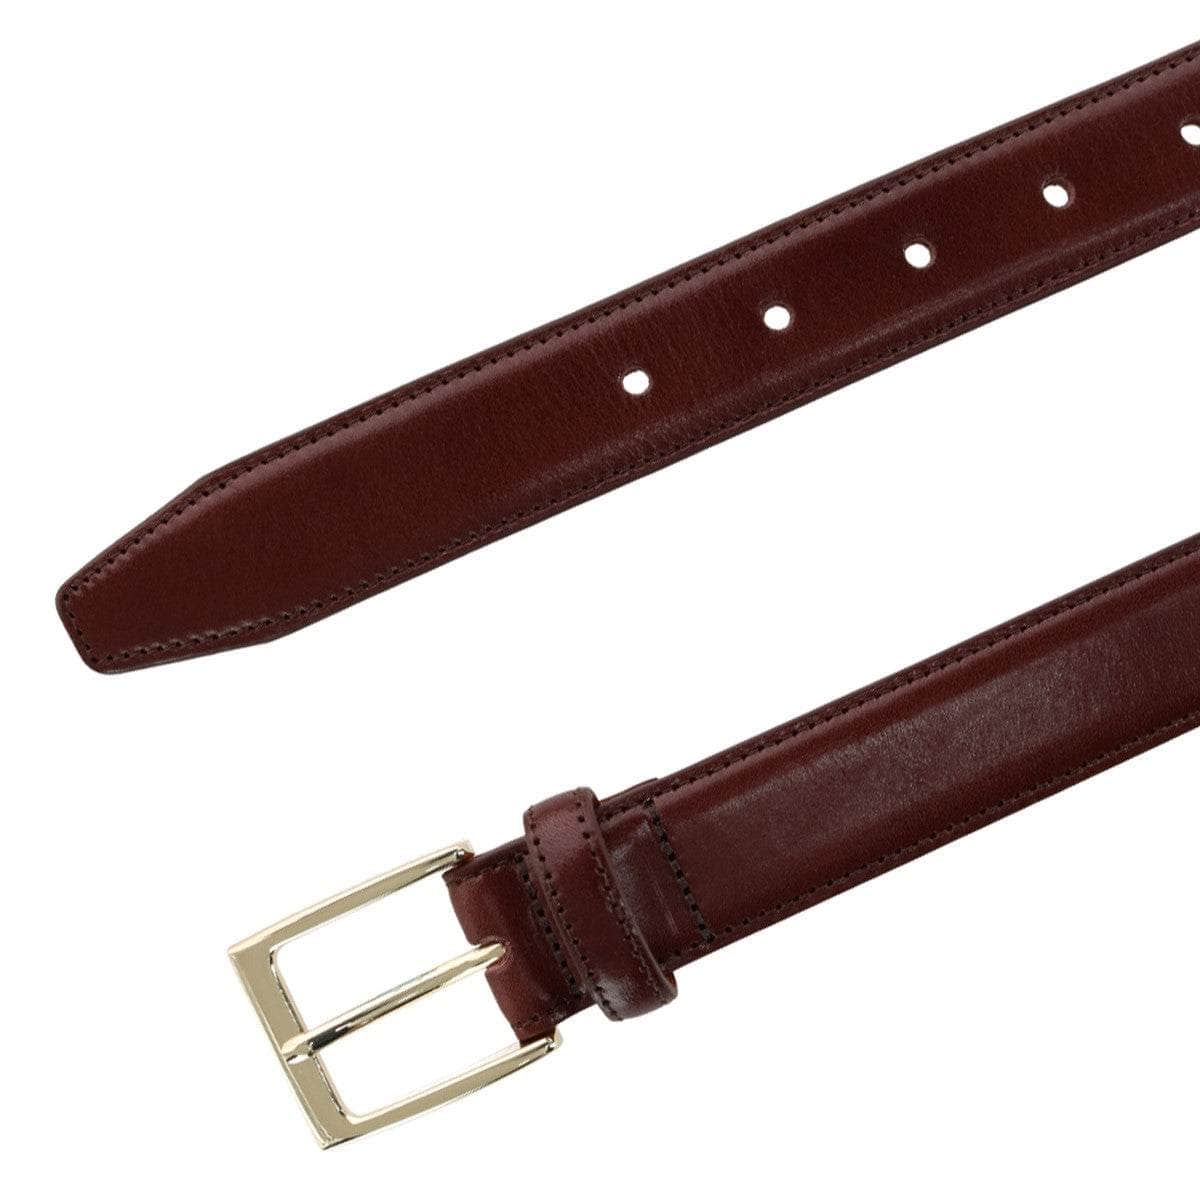 Classic 30mm Cortina Leather Belt by Trafalgar Men's Accessories